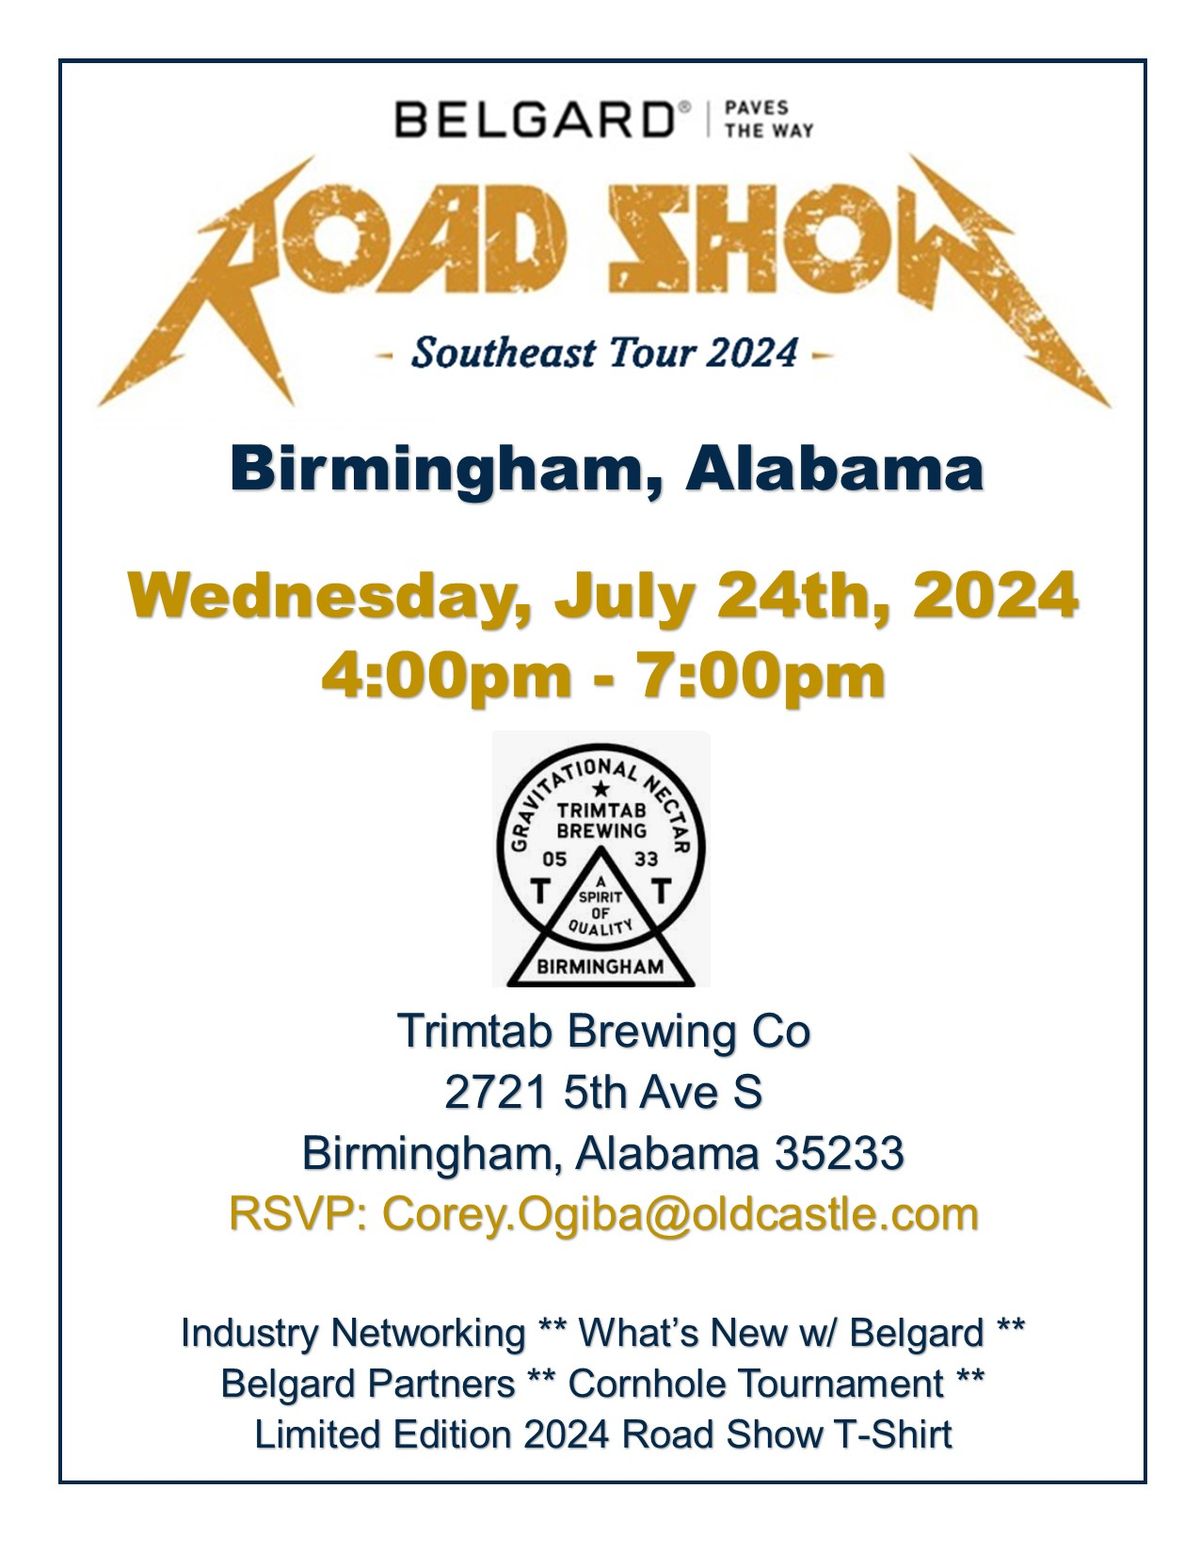 Belgard Road Show - Birmingham, Alabama